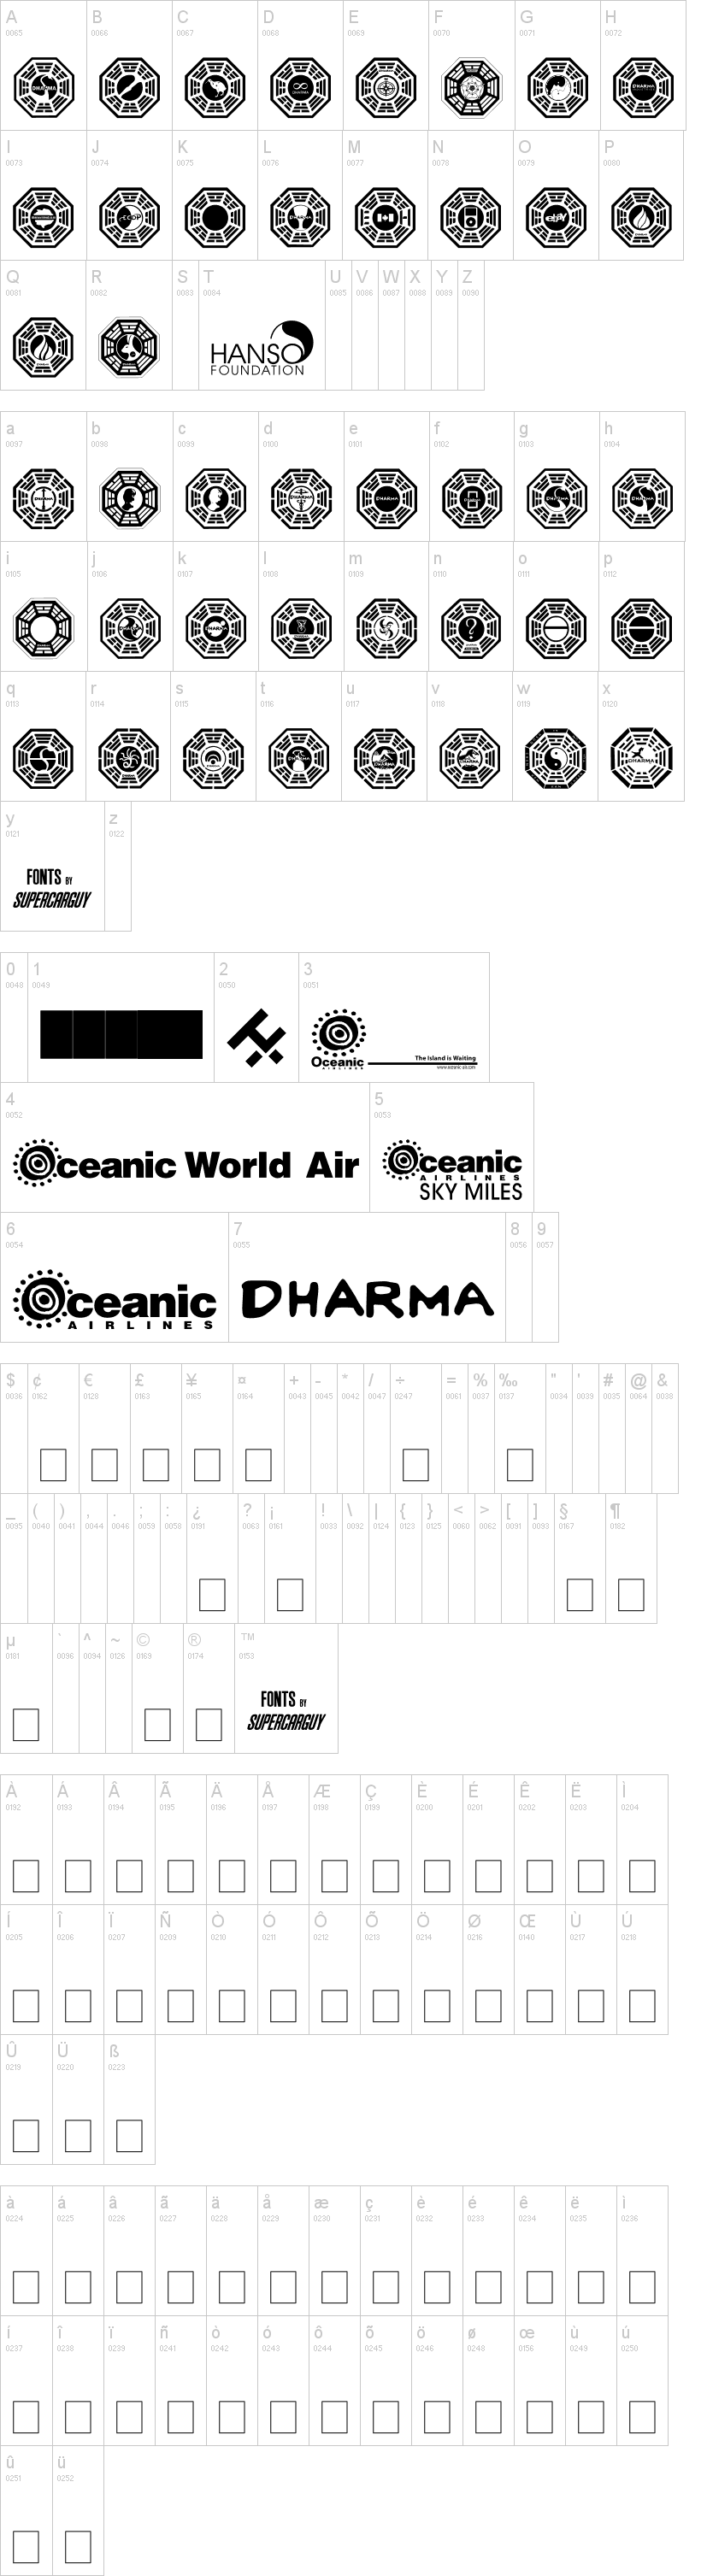 Dharma Initiative Logos字符映射图